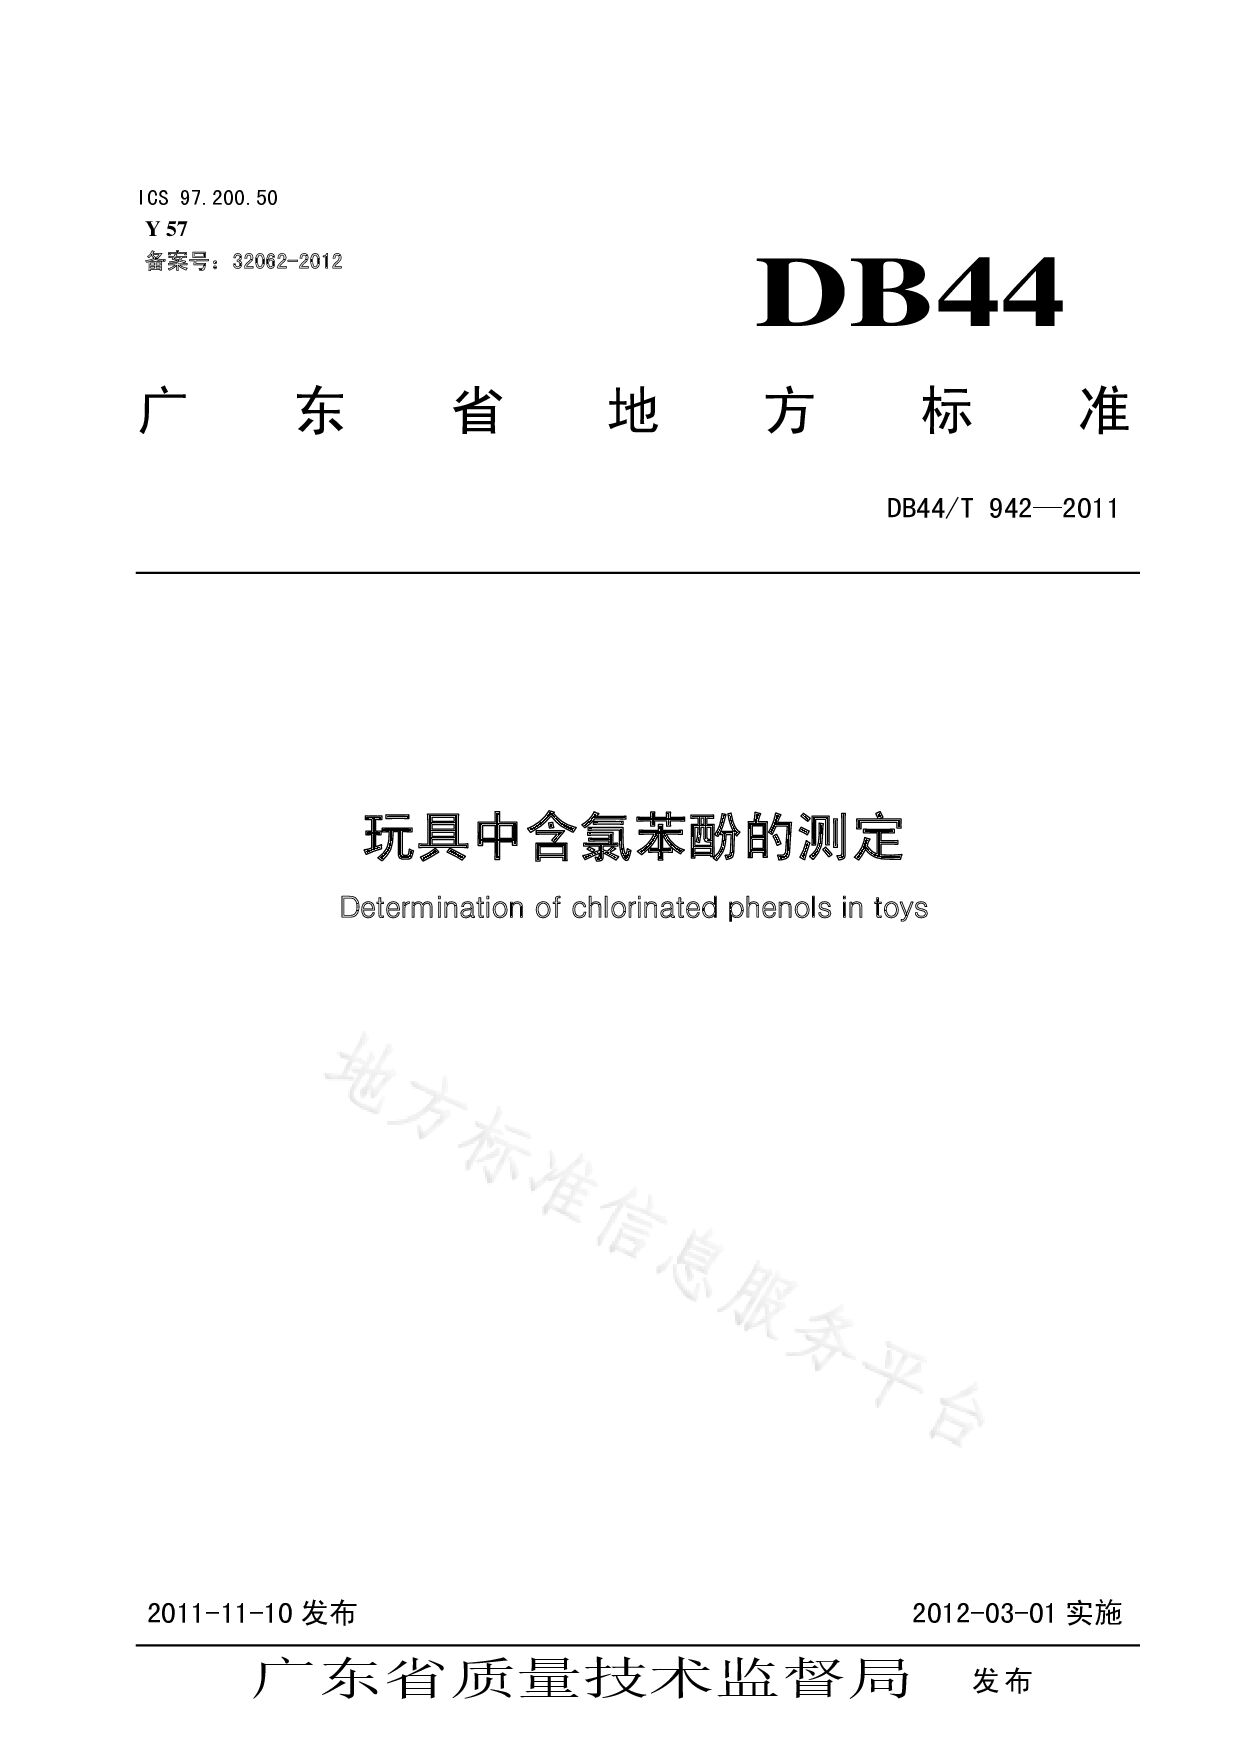 DB44/T 942-2011